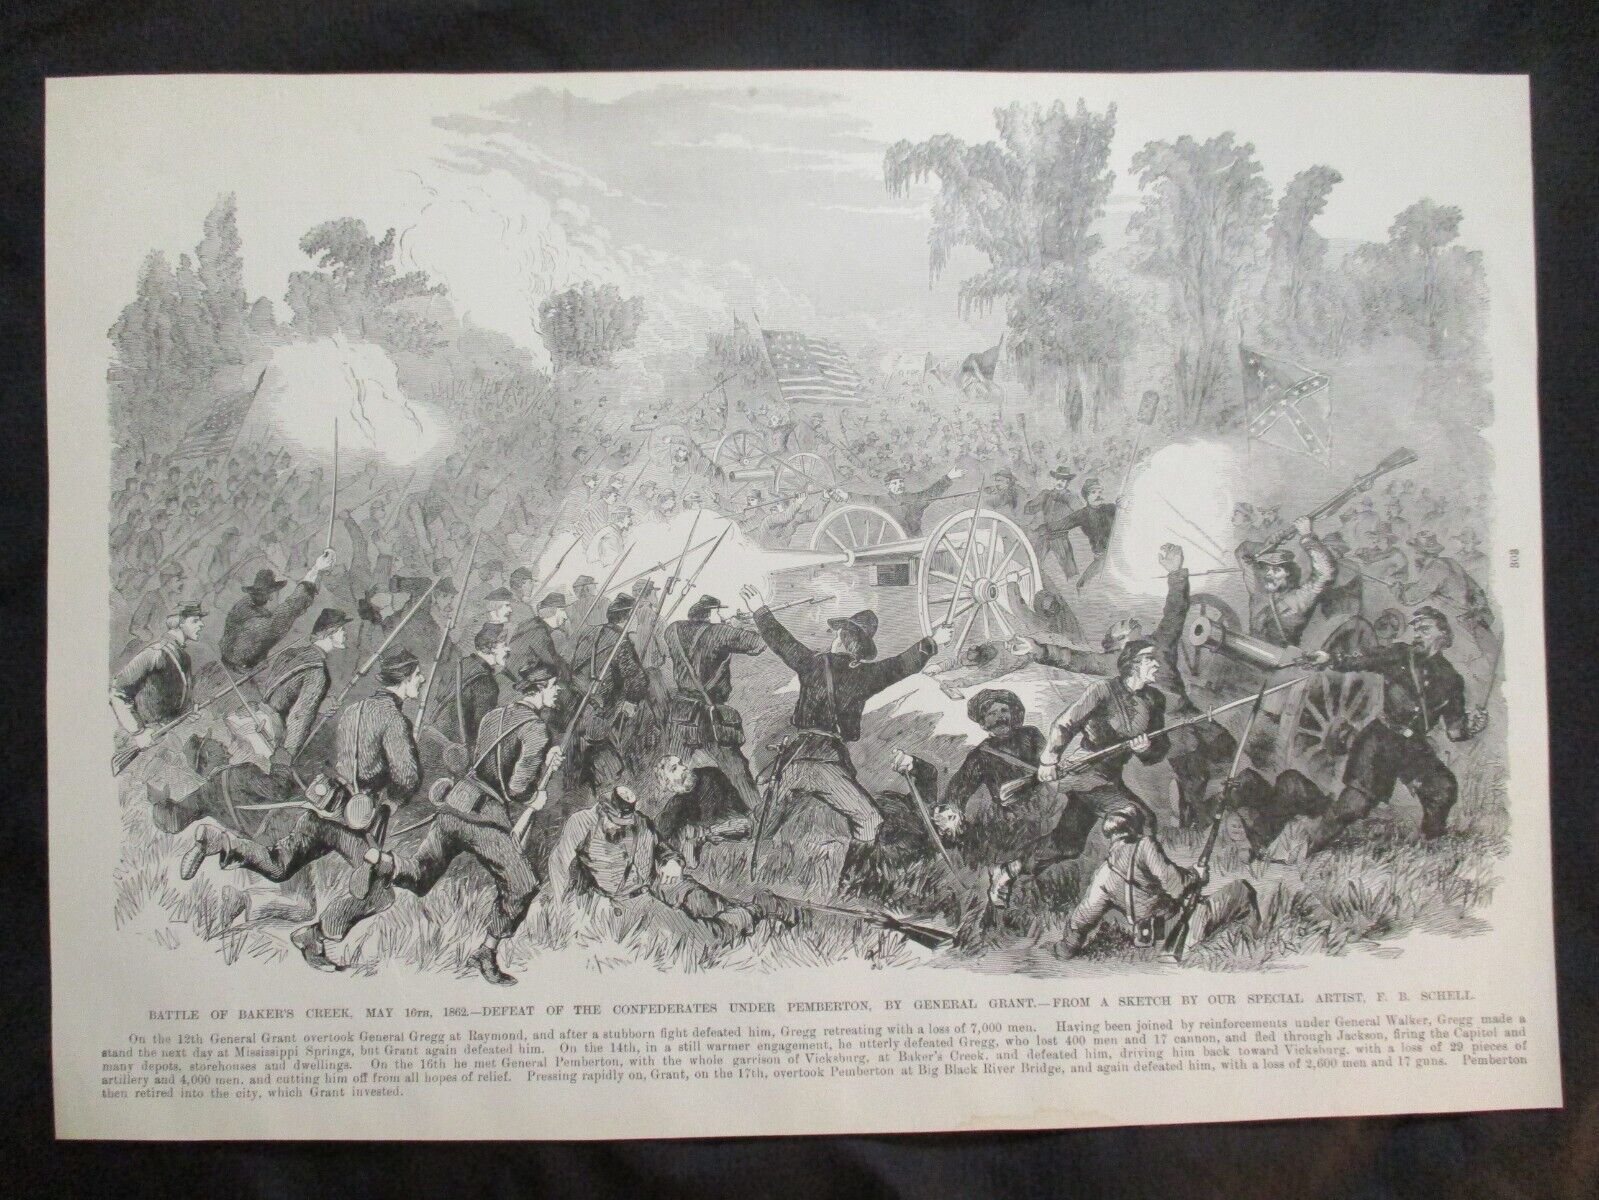 1884 Civil War Print - Defeat of Confederates Under Pemberton, Bakers Creek, MS